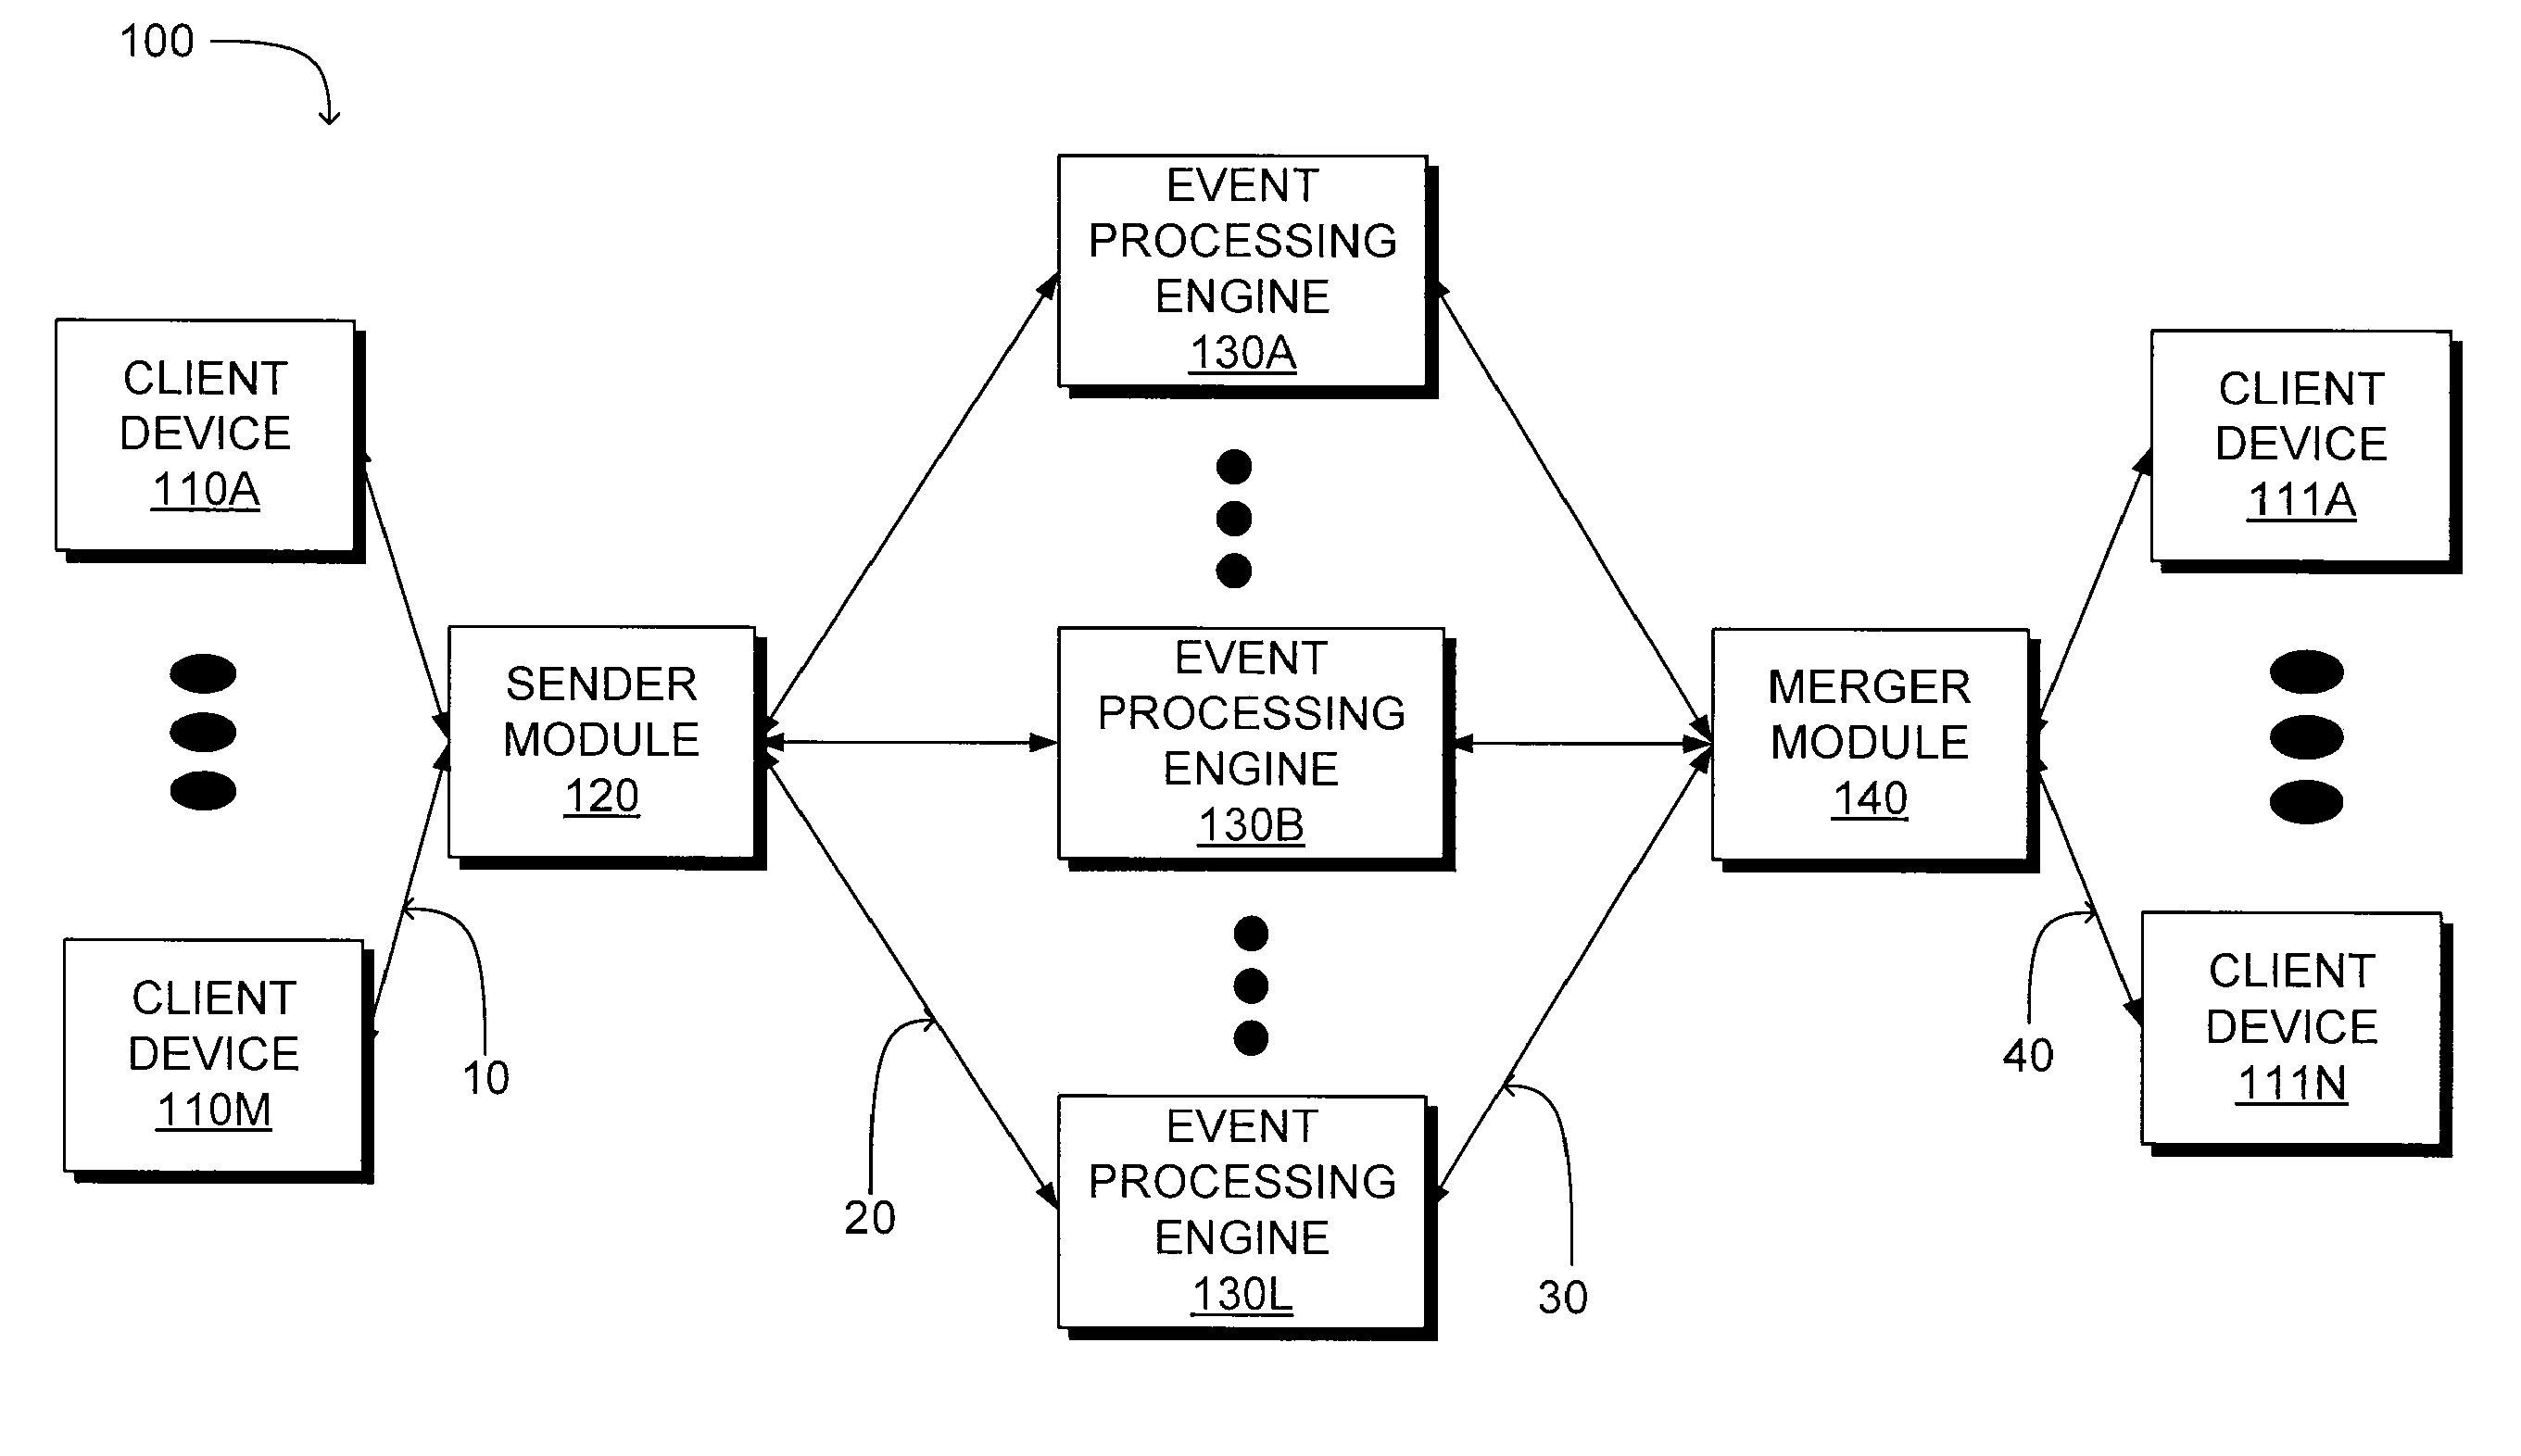 Complex event processing system having multiple redundant event processing engines